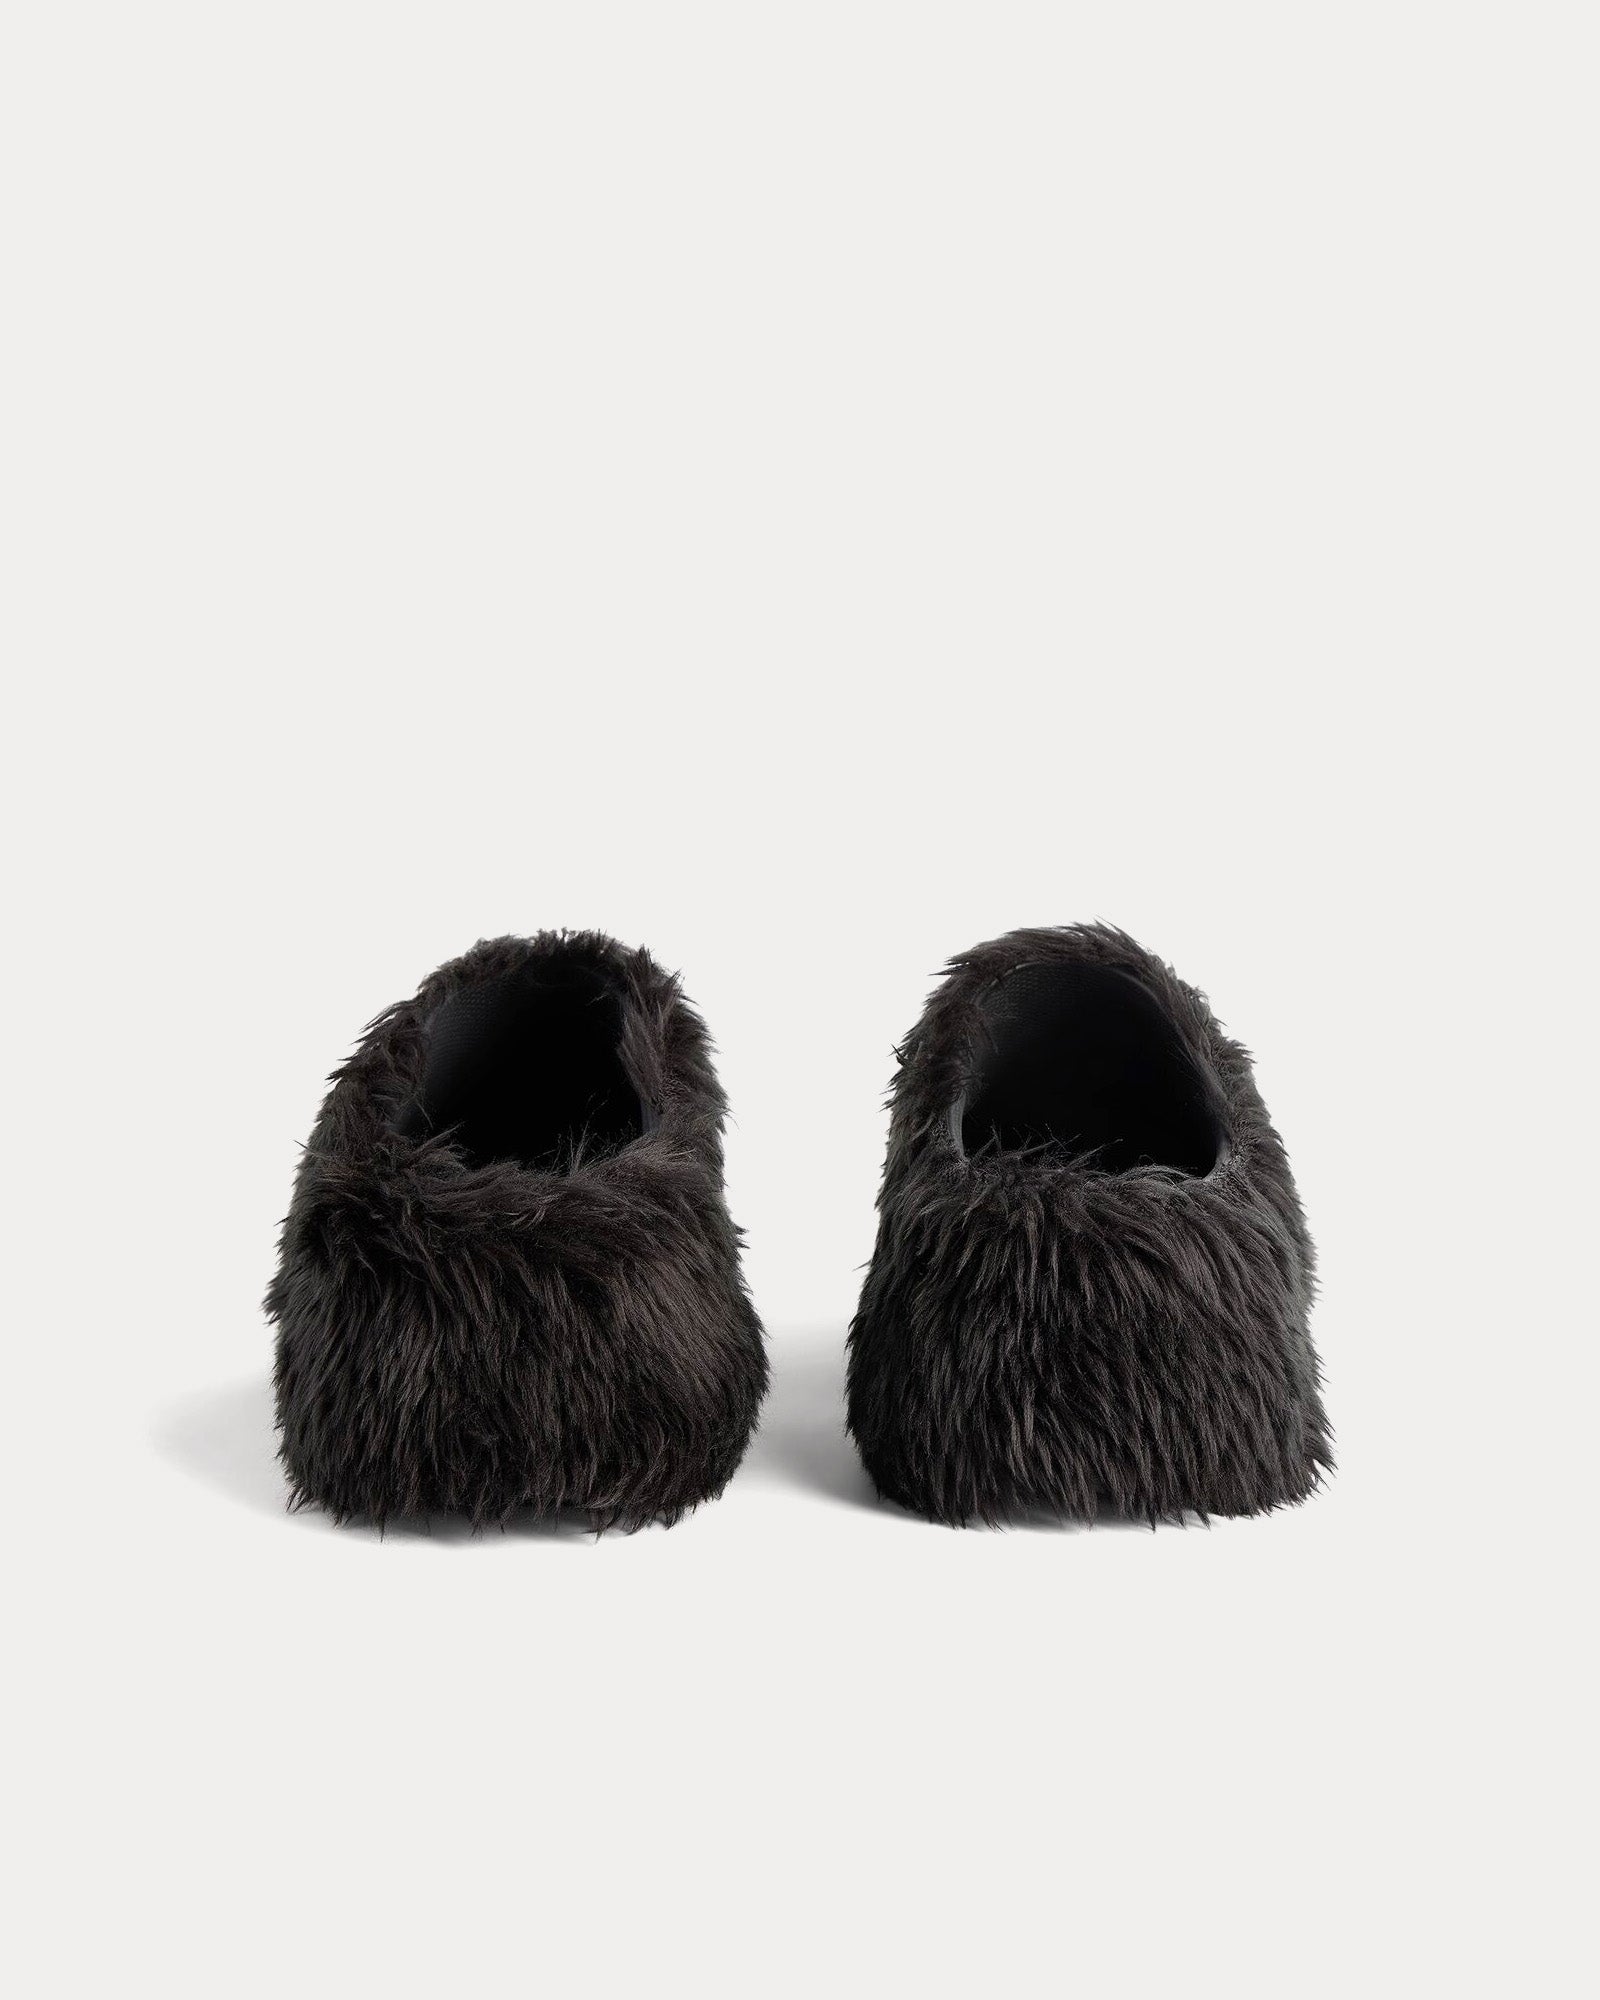 Balenciaga x Crocs - Fake Fur Black Mules